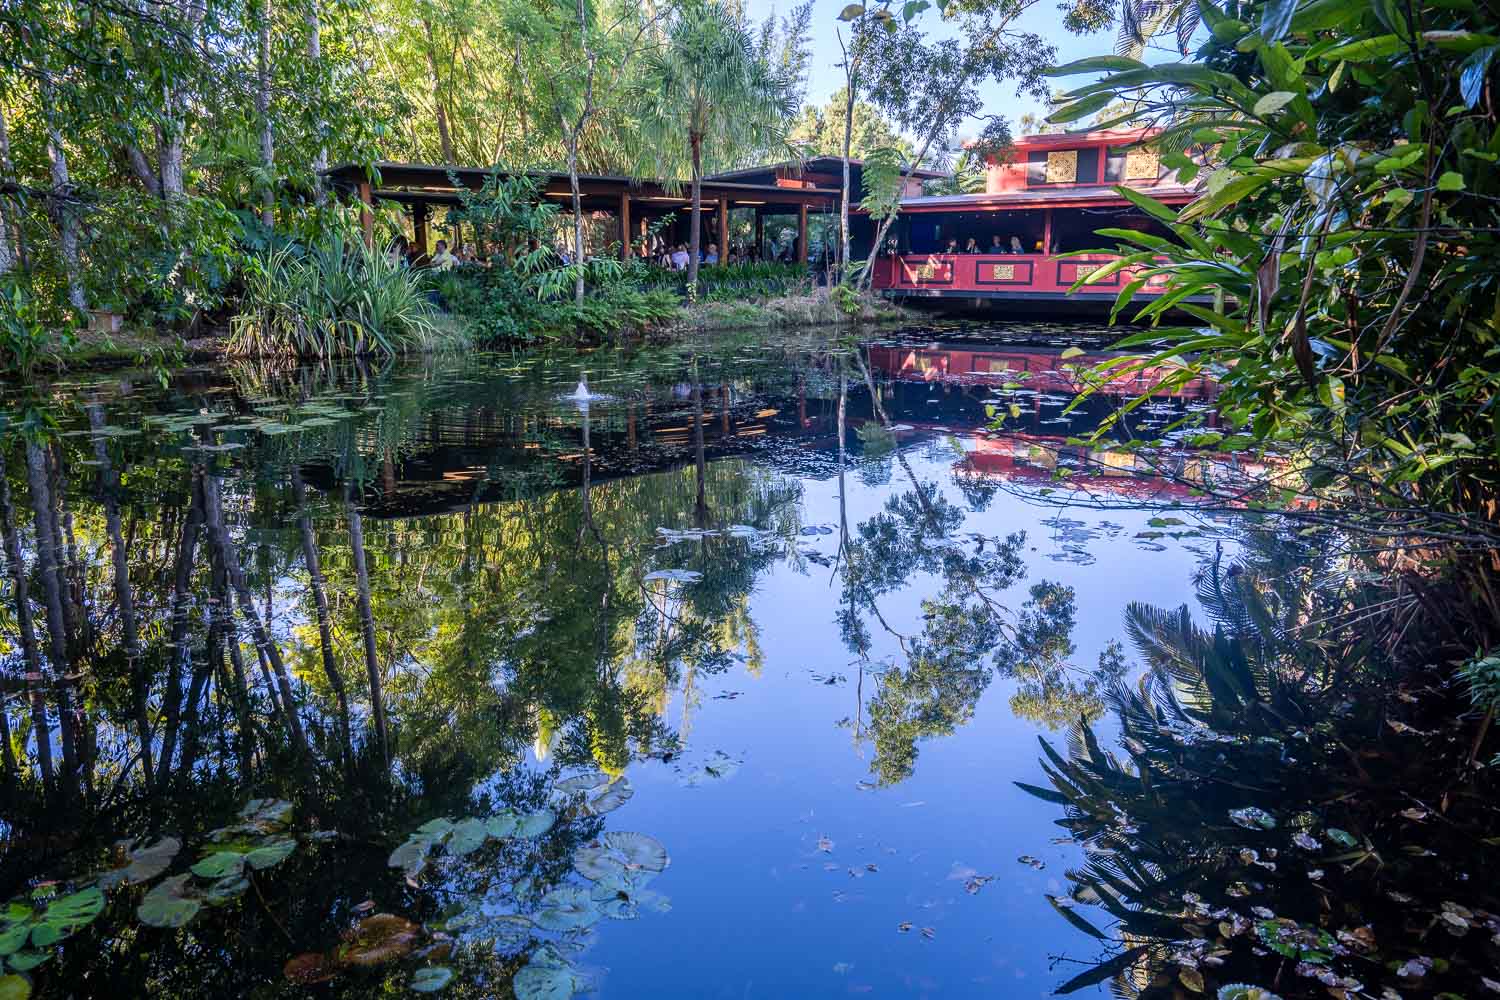 Spirit House restaurant reflected in a picturesque pond and lush greenery, Sunshine Coast Hinterland, Queensland, Australia